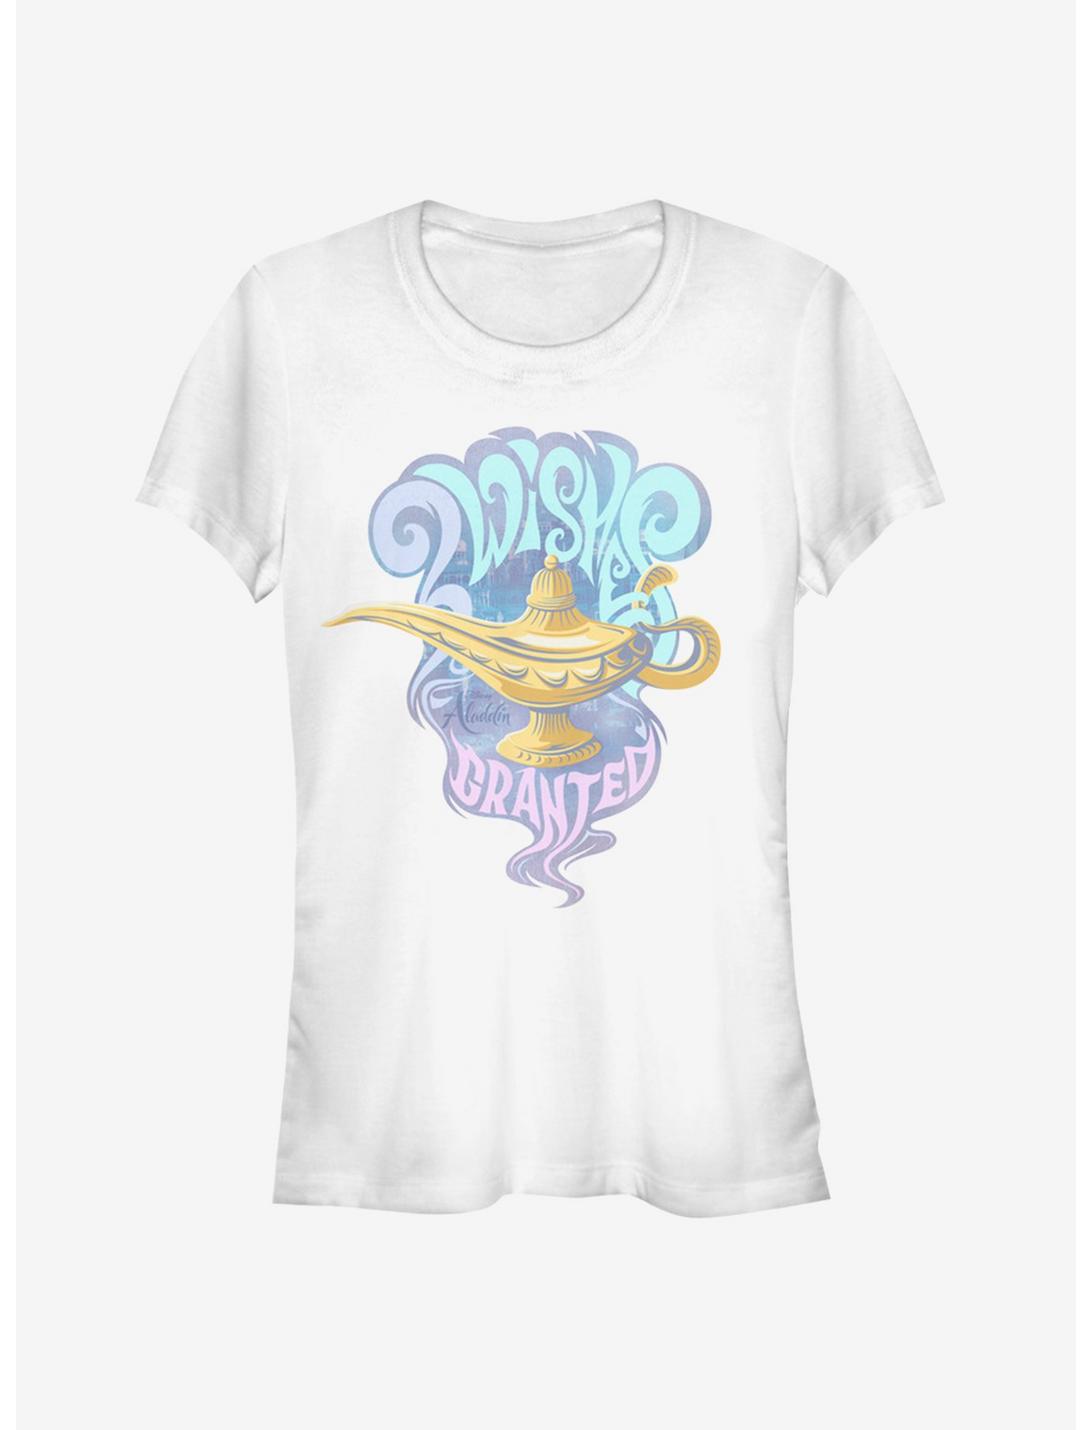 Disney Aladdin 2019 Wishes Granted Girls T-Shirt, WHITE, hi-res